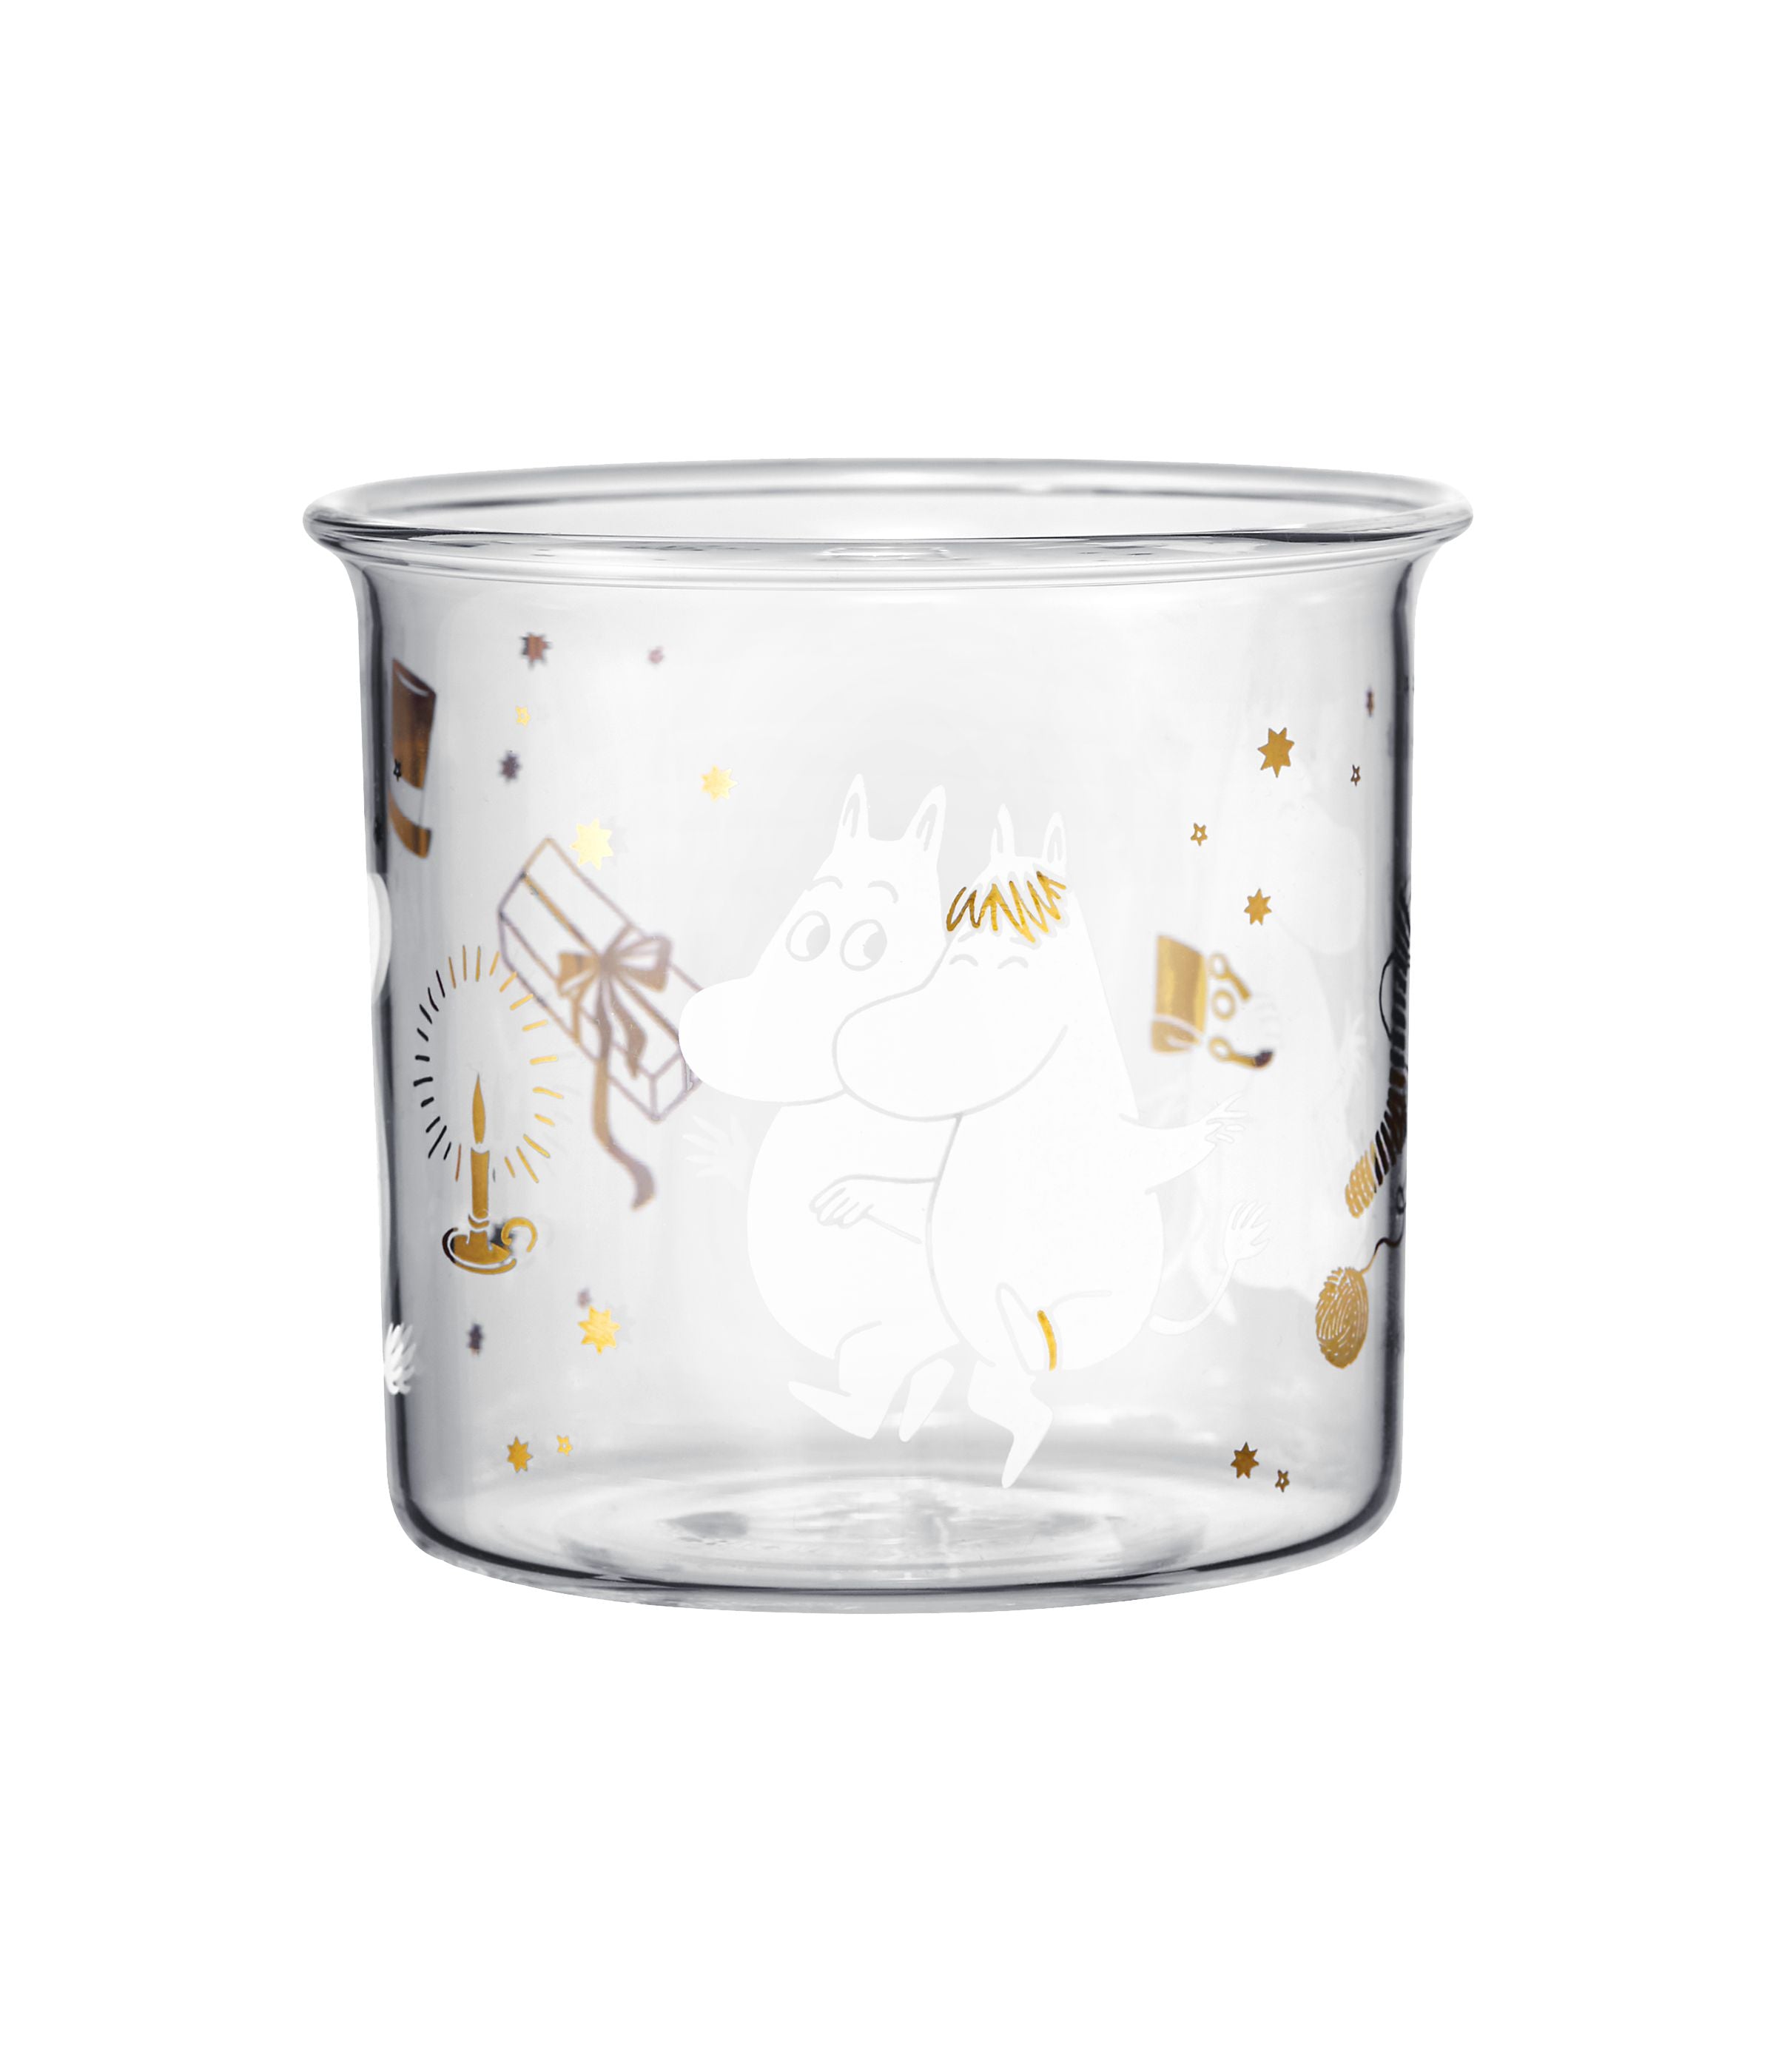 Muurla Moomin Glass tazza scintillanti stelle